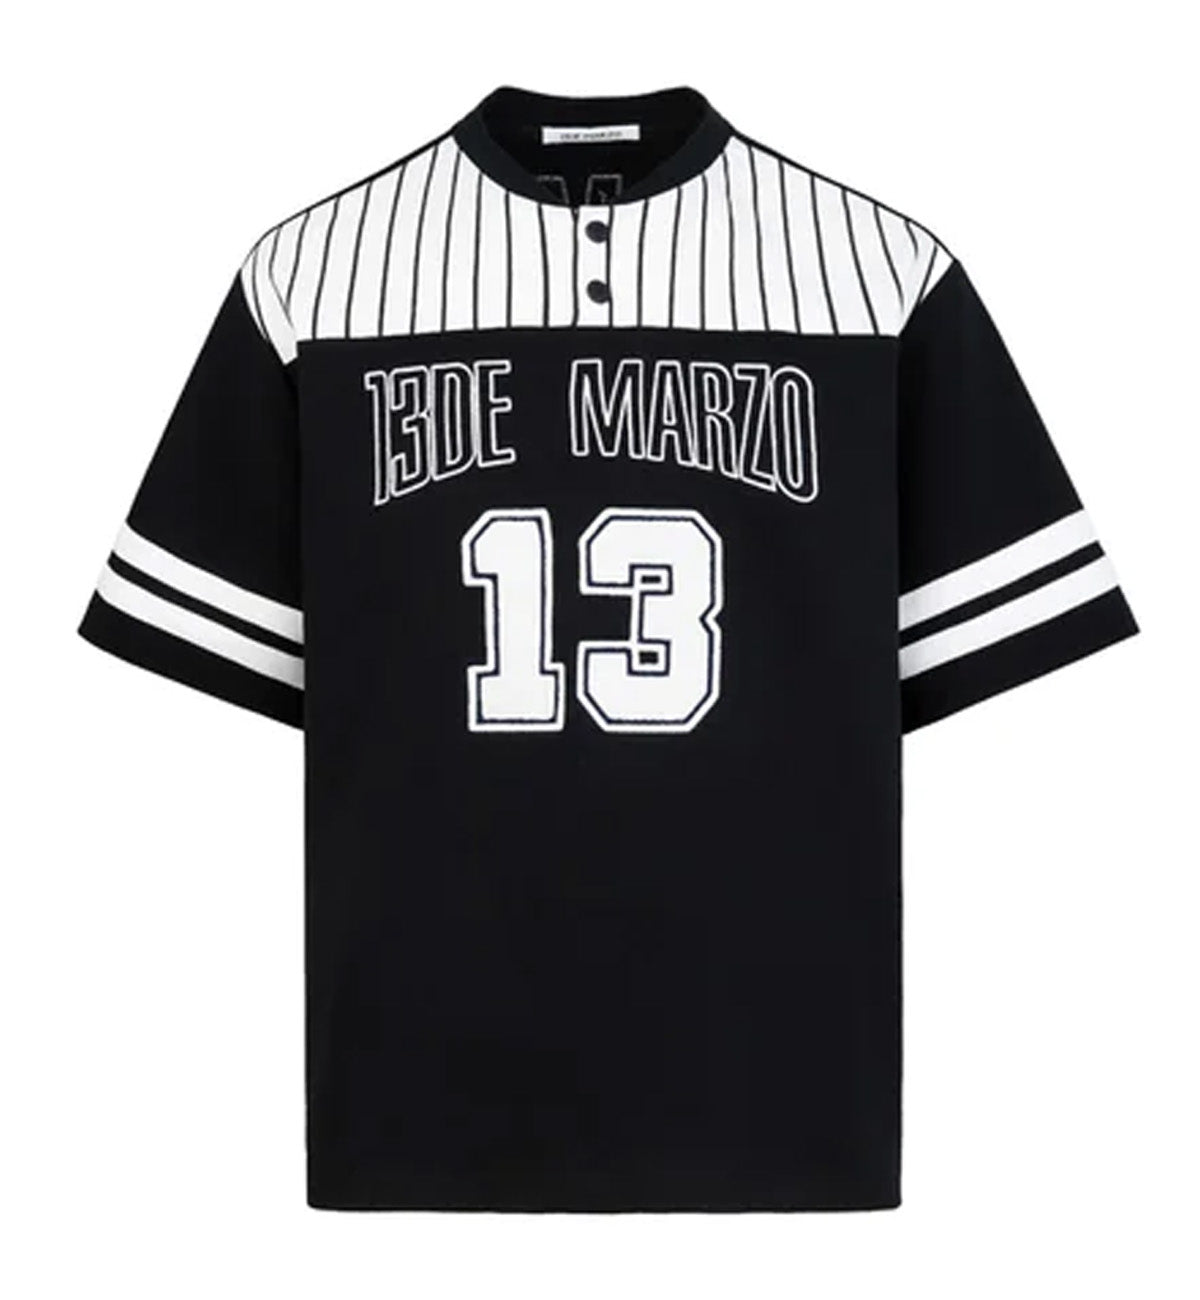 13DE MARZO Baseball Bear Fan T-Shirt Black